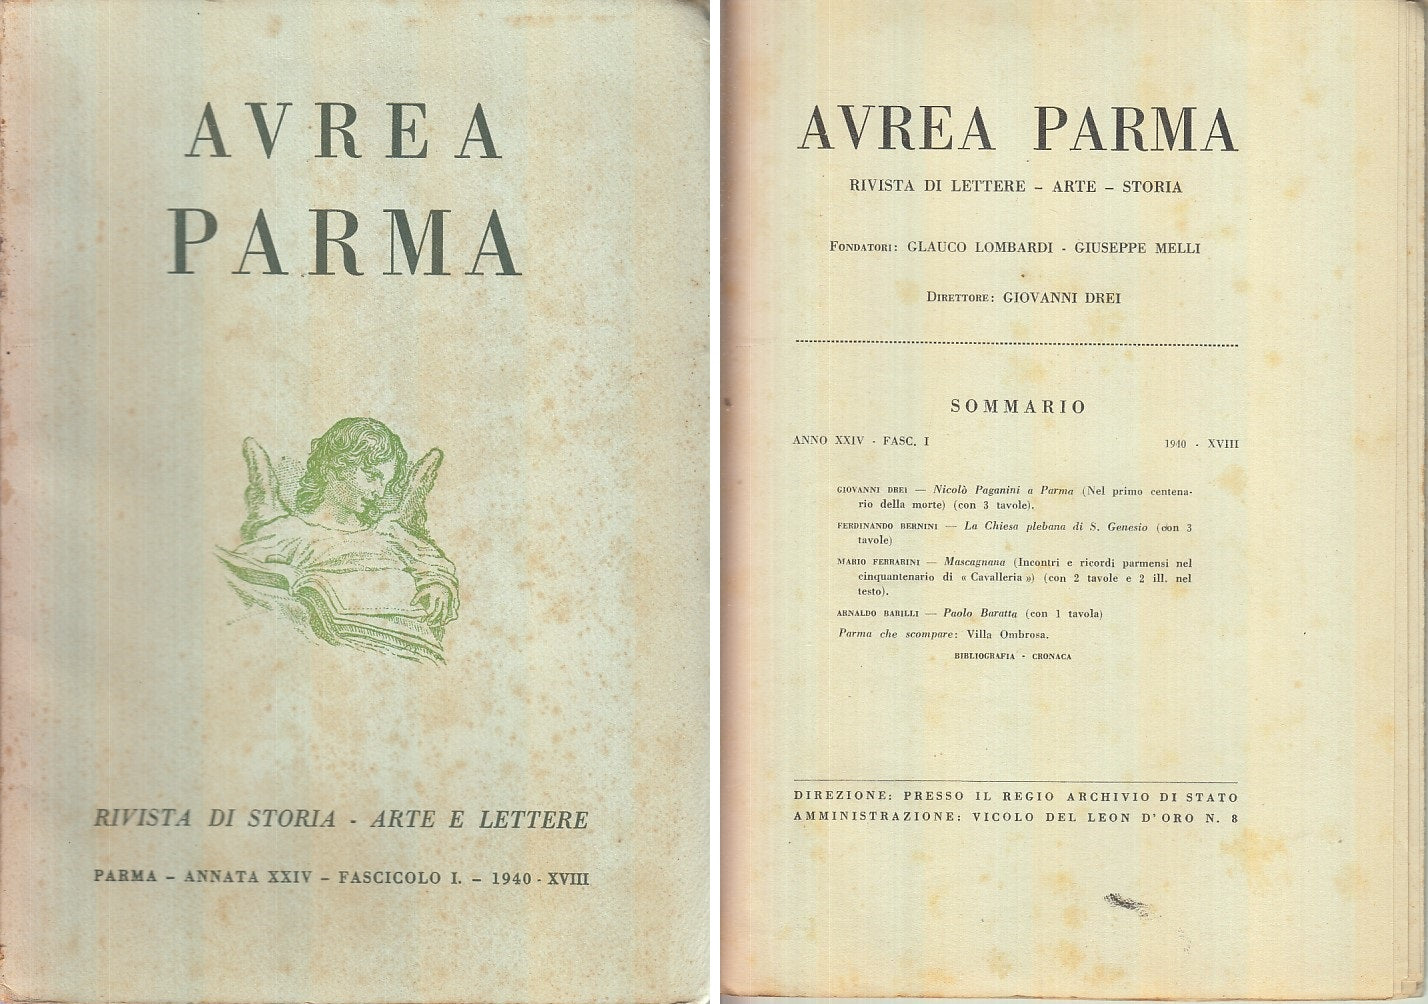 LR- RIVISTA AUREA PARMA ANNO XXIV FASC. 1 -- BODONIANA --- 1940 - B - XFS55